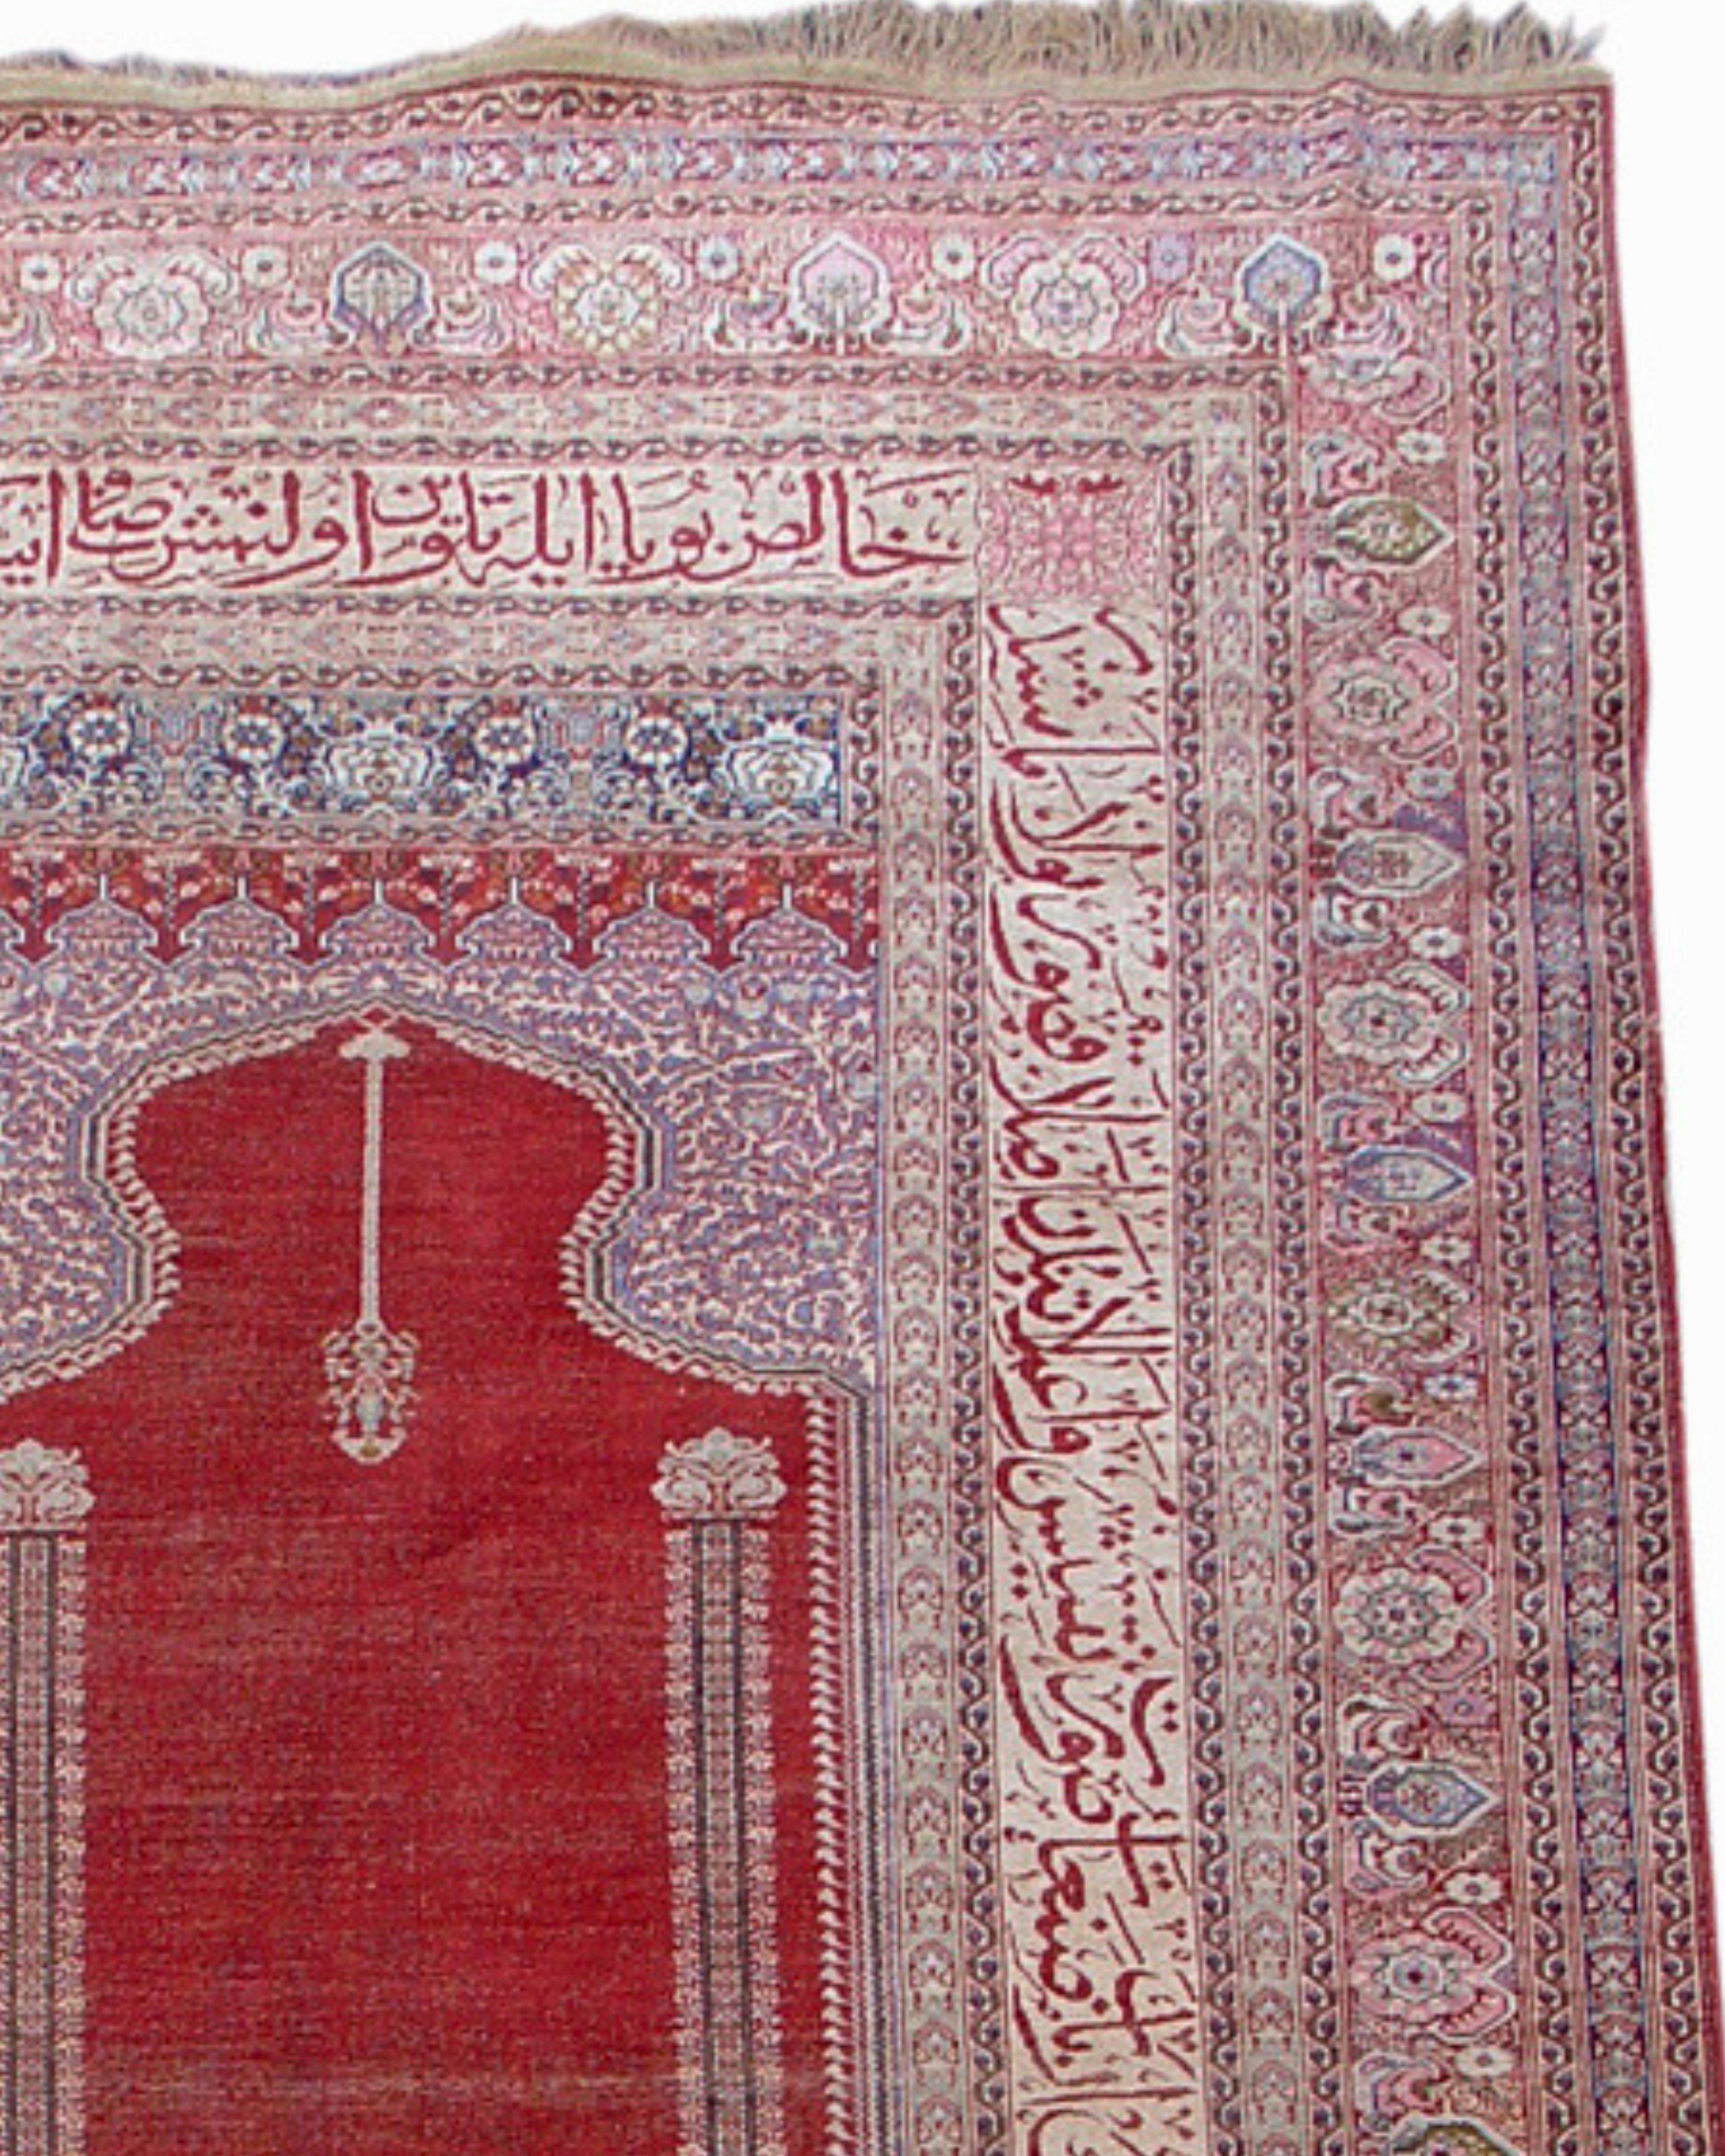 Antique Anatolian Silk Sivas Rug, Early 20th Century

Additional Information:
Dimensions: 5'2 W x 7'1